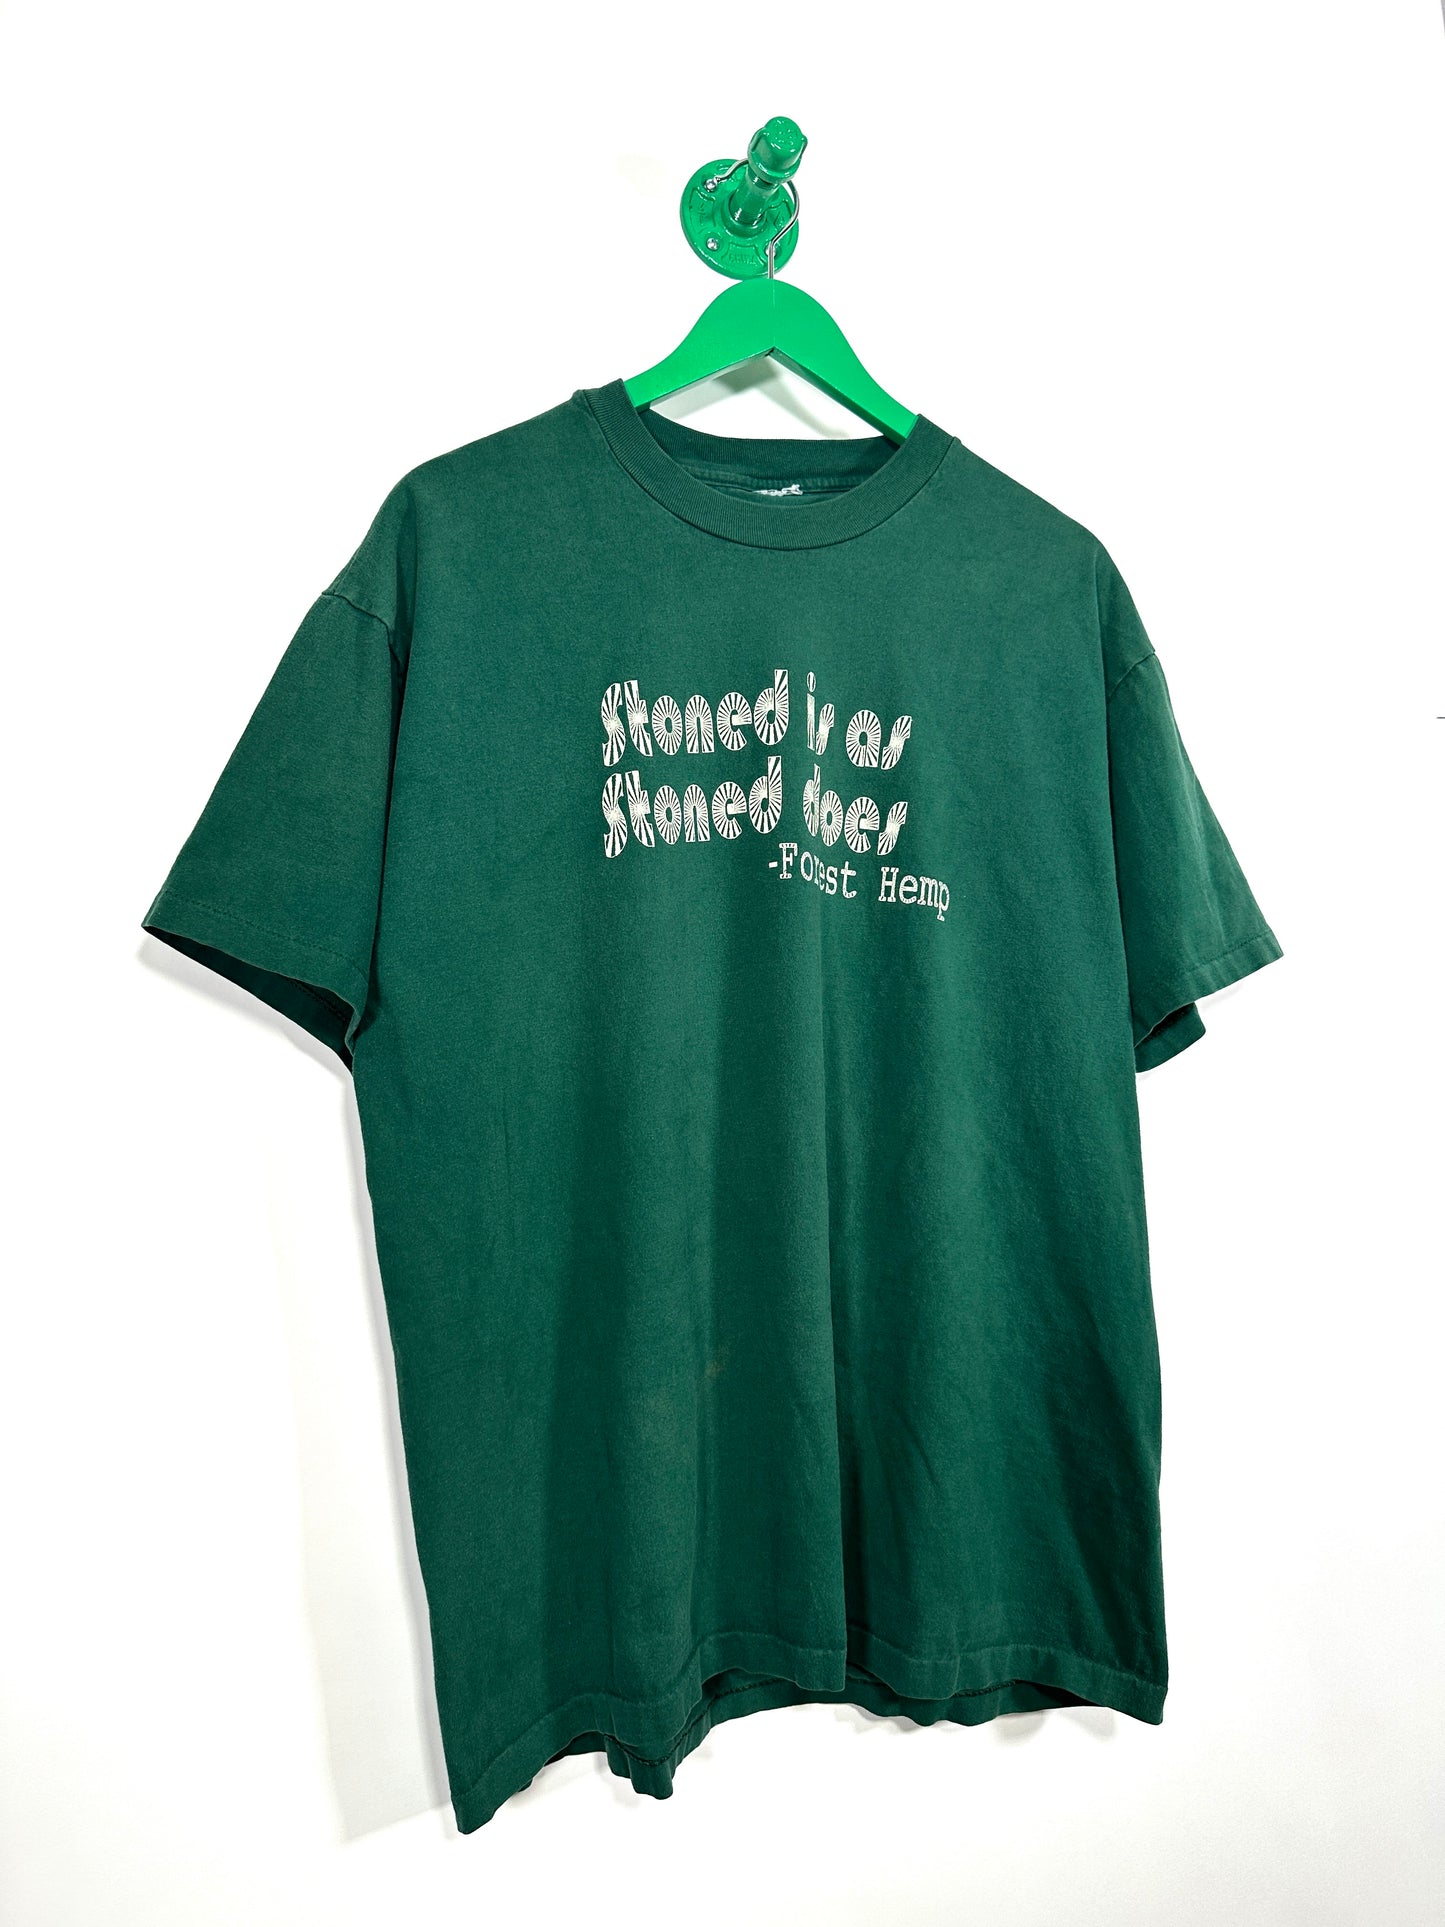 90s Stoned T Shirt - XL